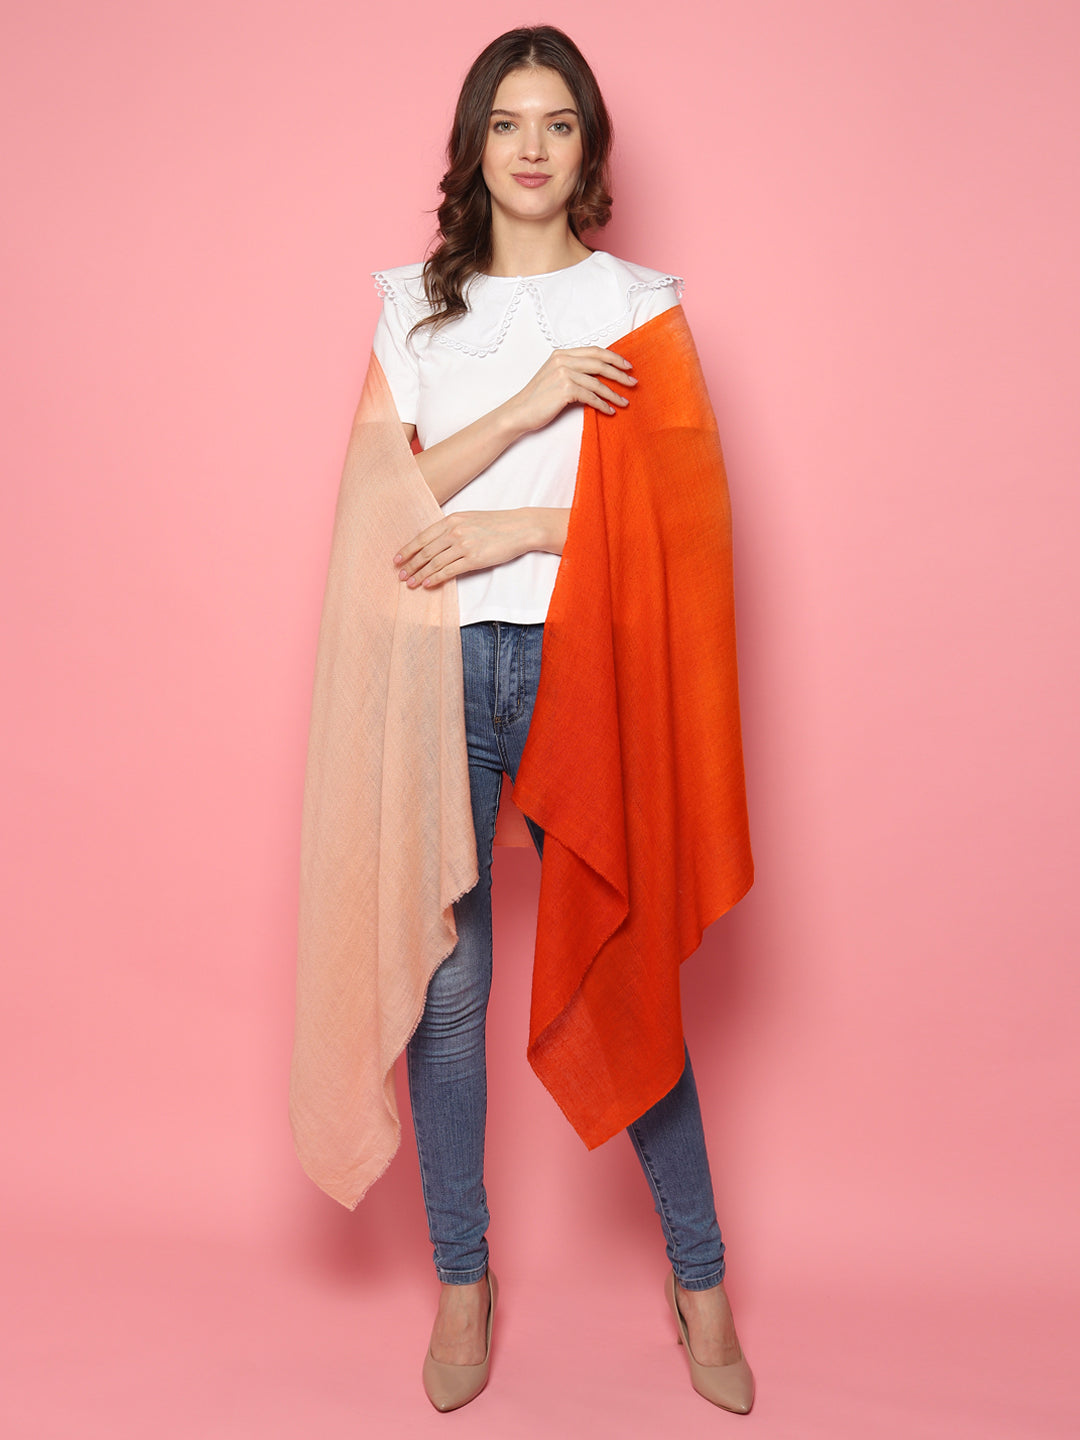 online pashmina shawl, online shawl, online shawl shopping